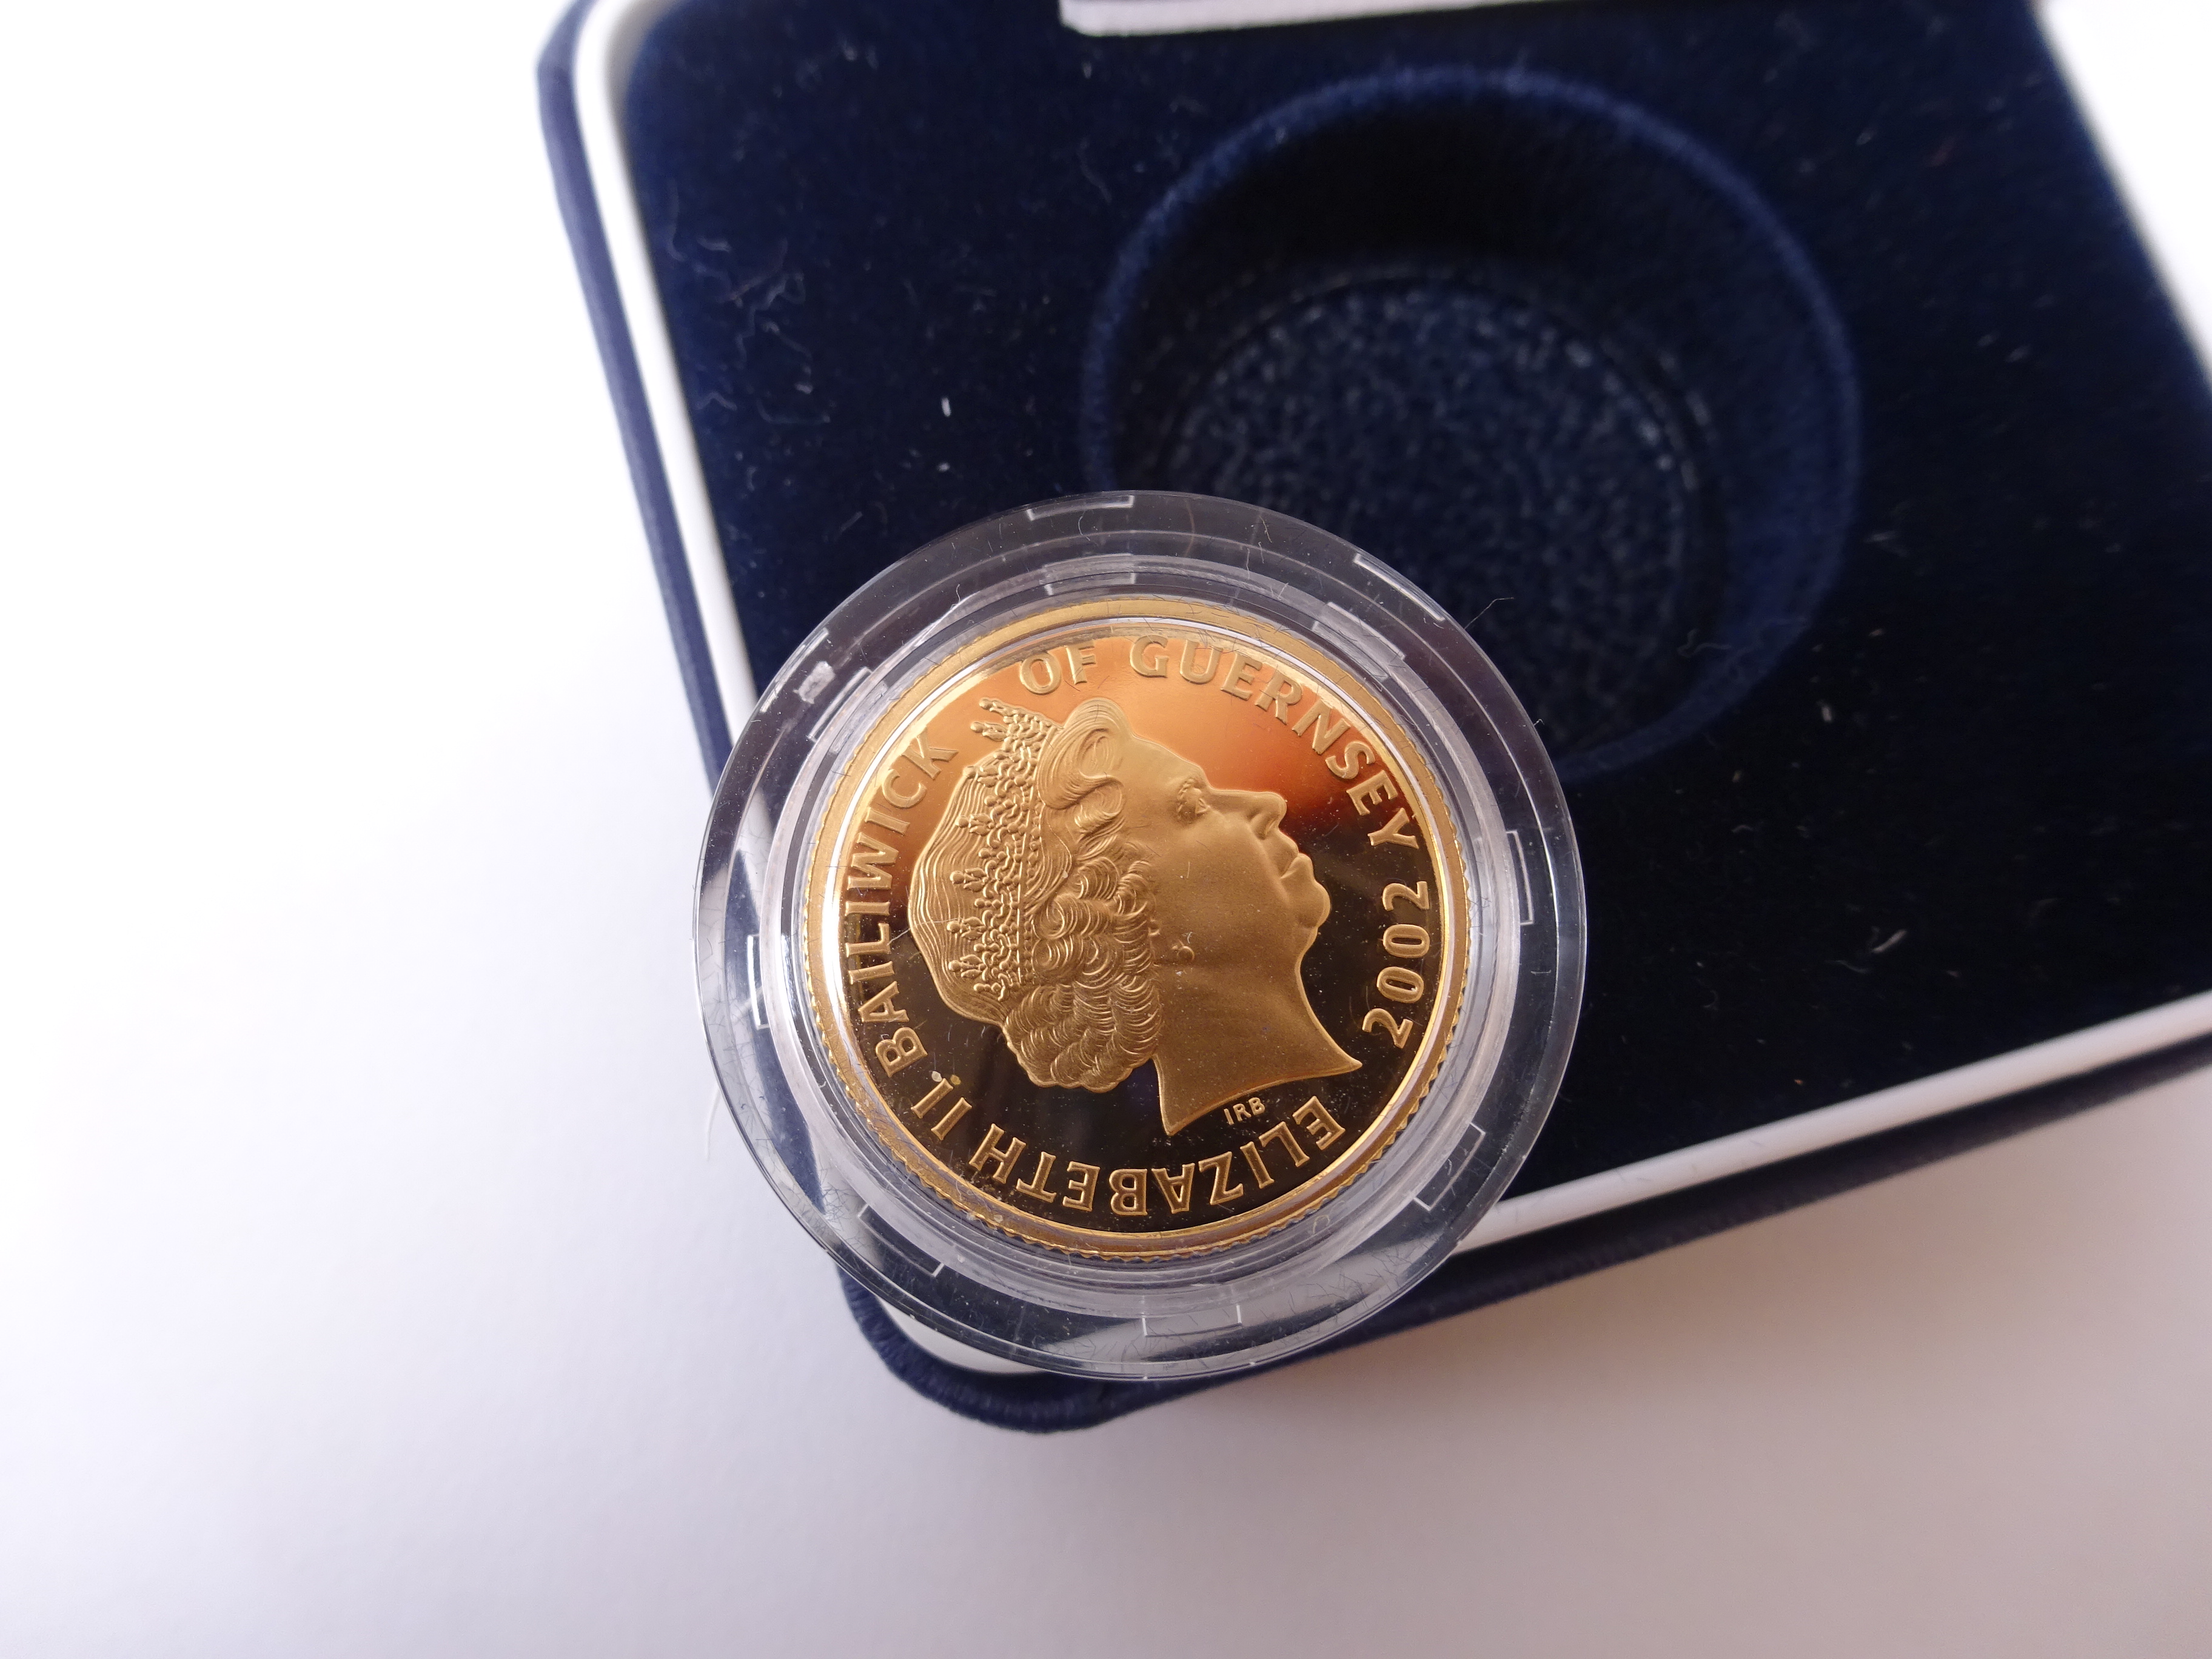 Queen Elizabeth II 2002 Guernsey gold proof twenty-five pound coin, - Image 3 of 3